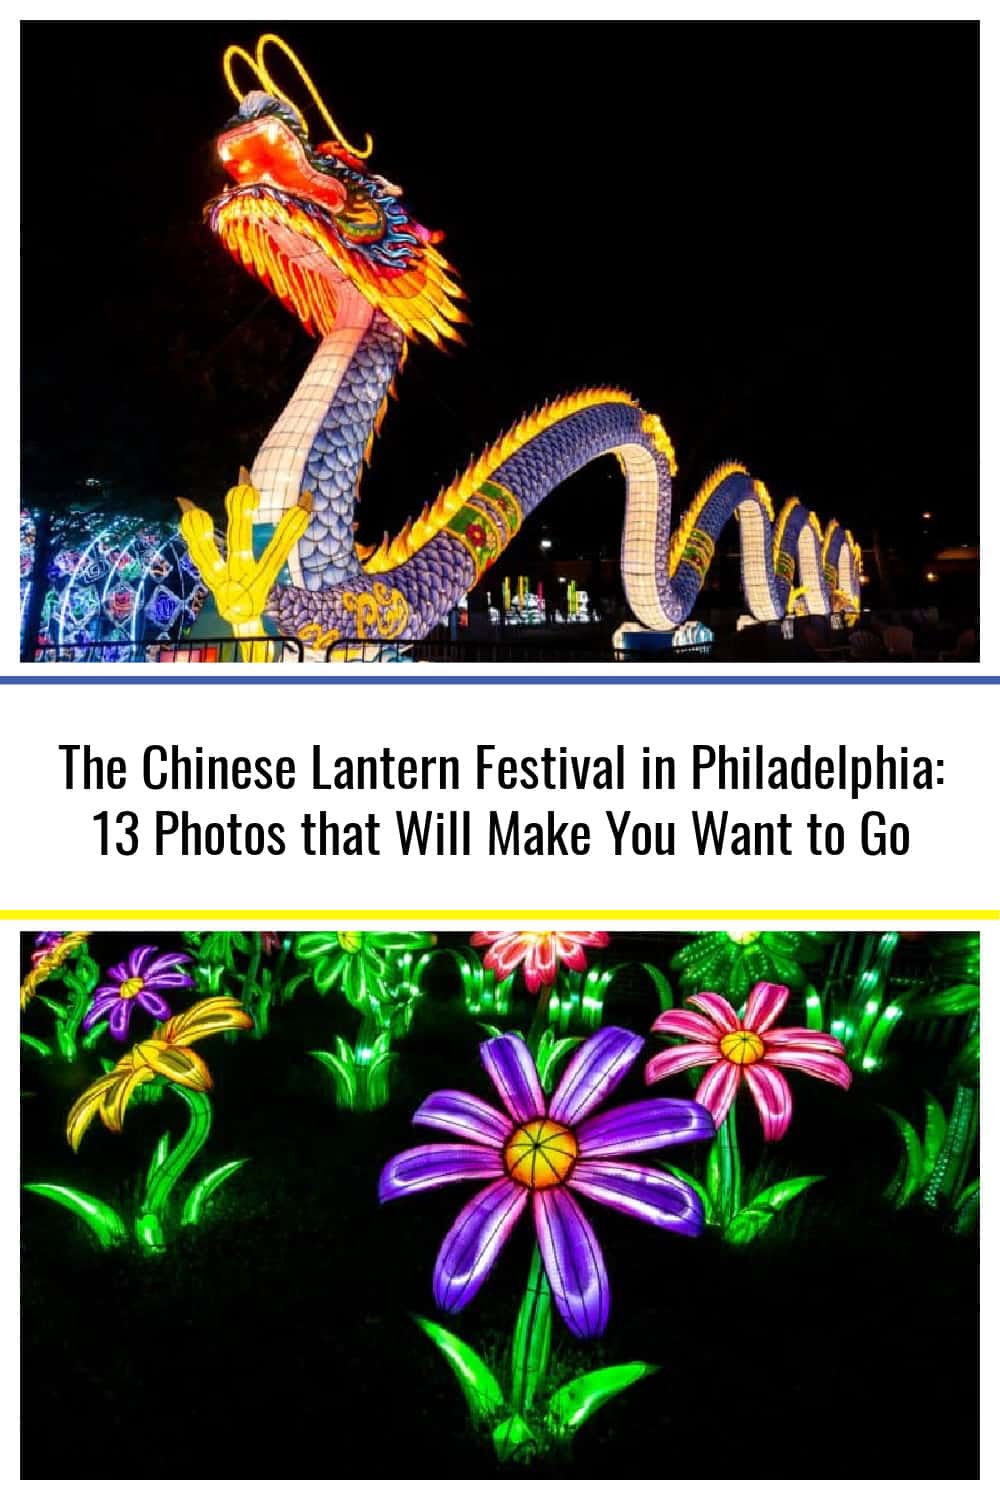 chinese lantern festival philadelphia 2018 tickets